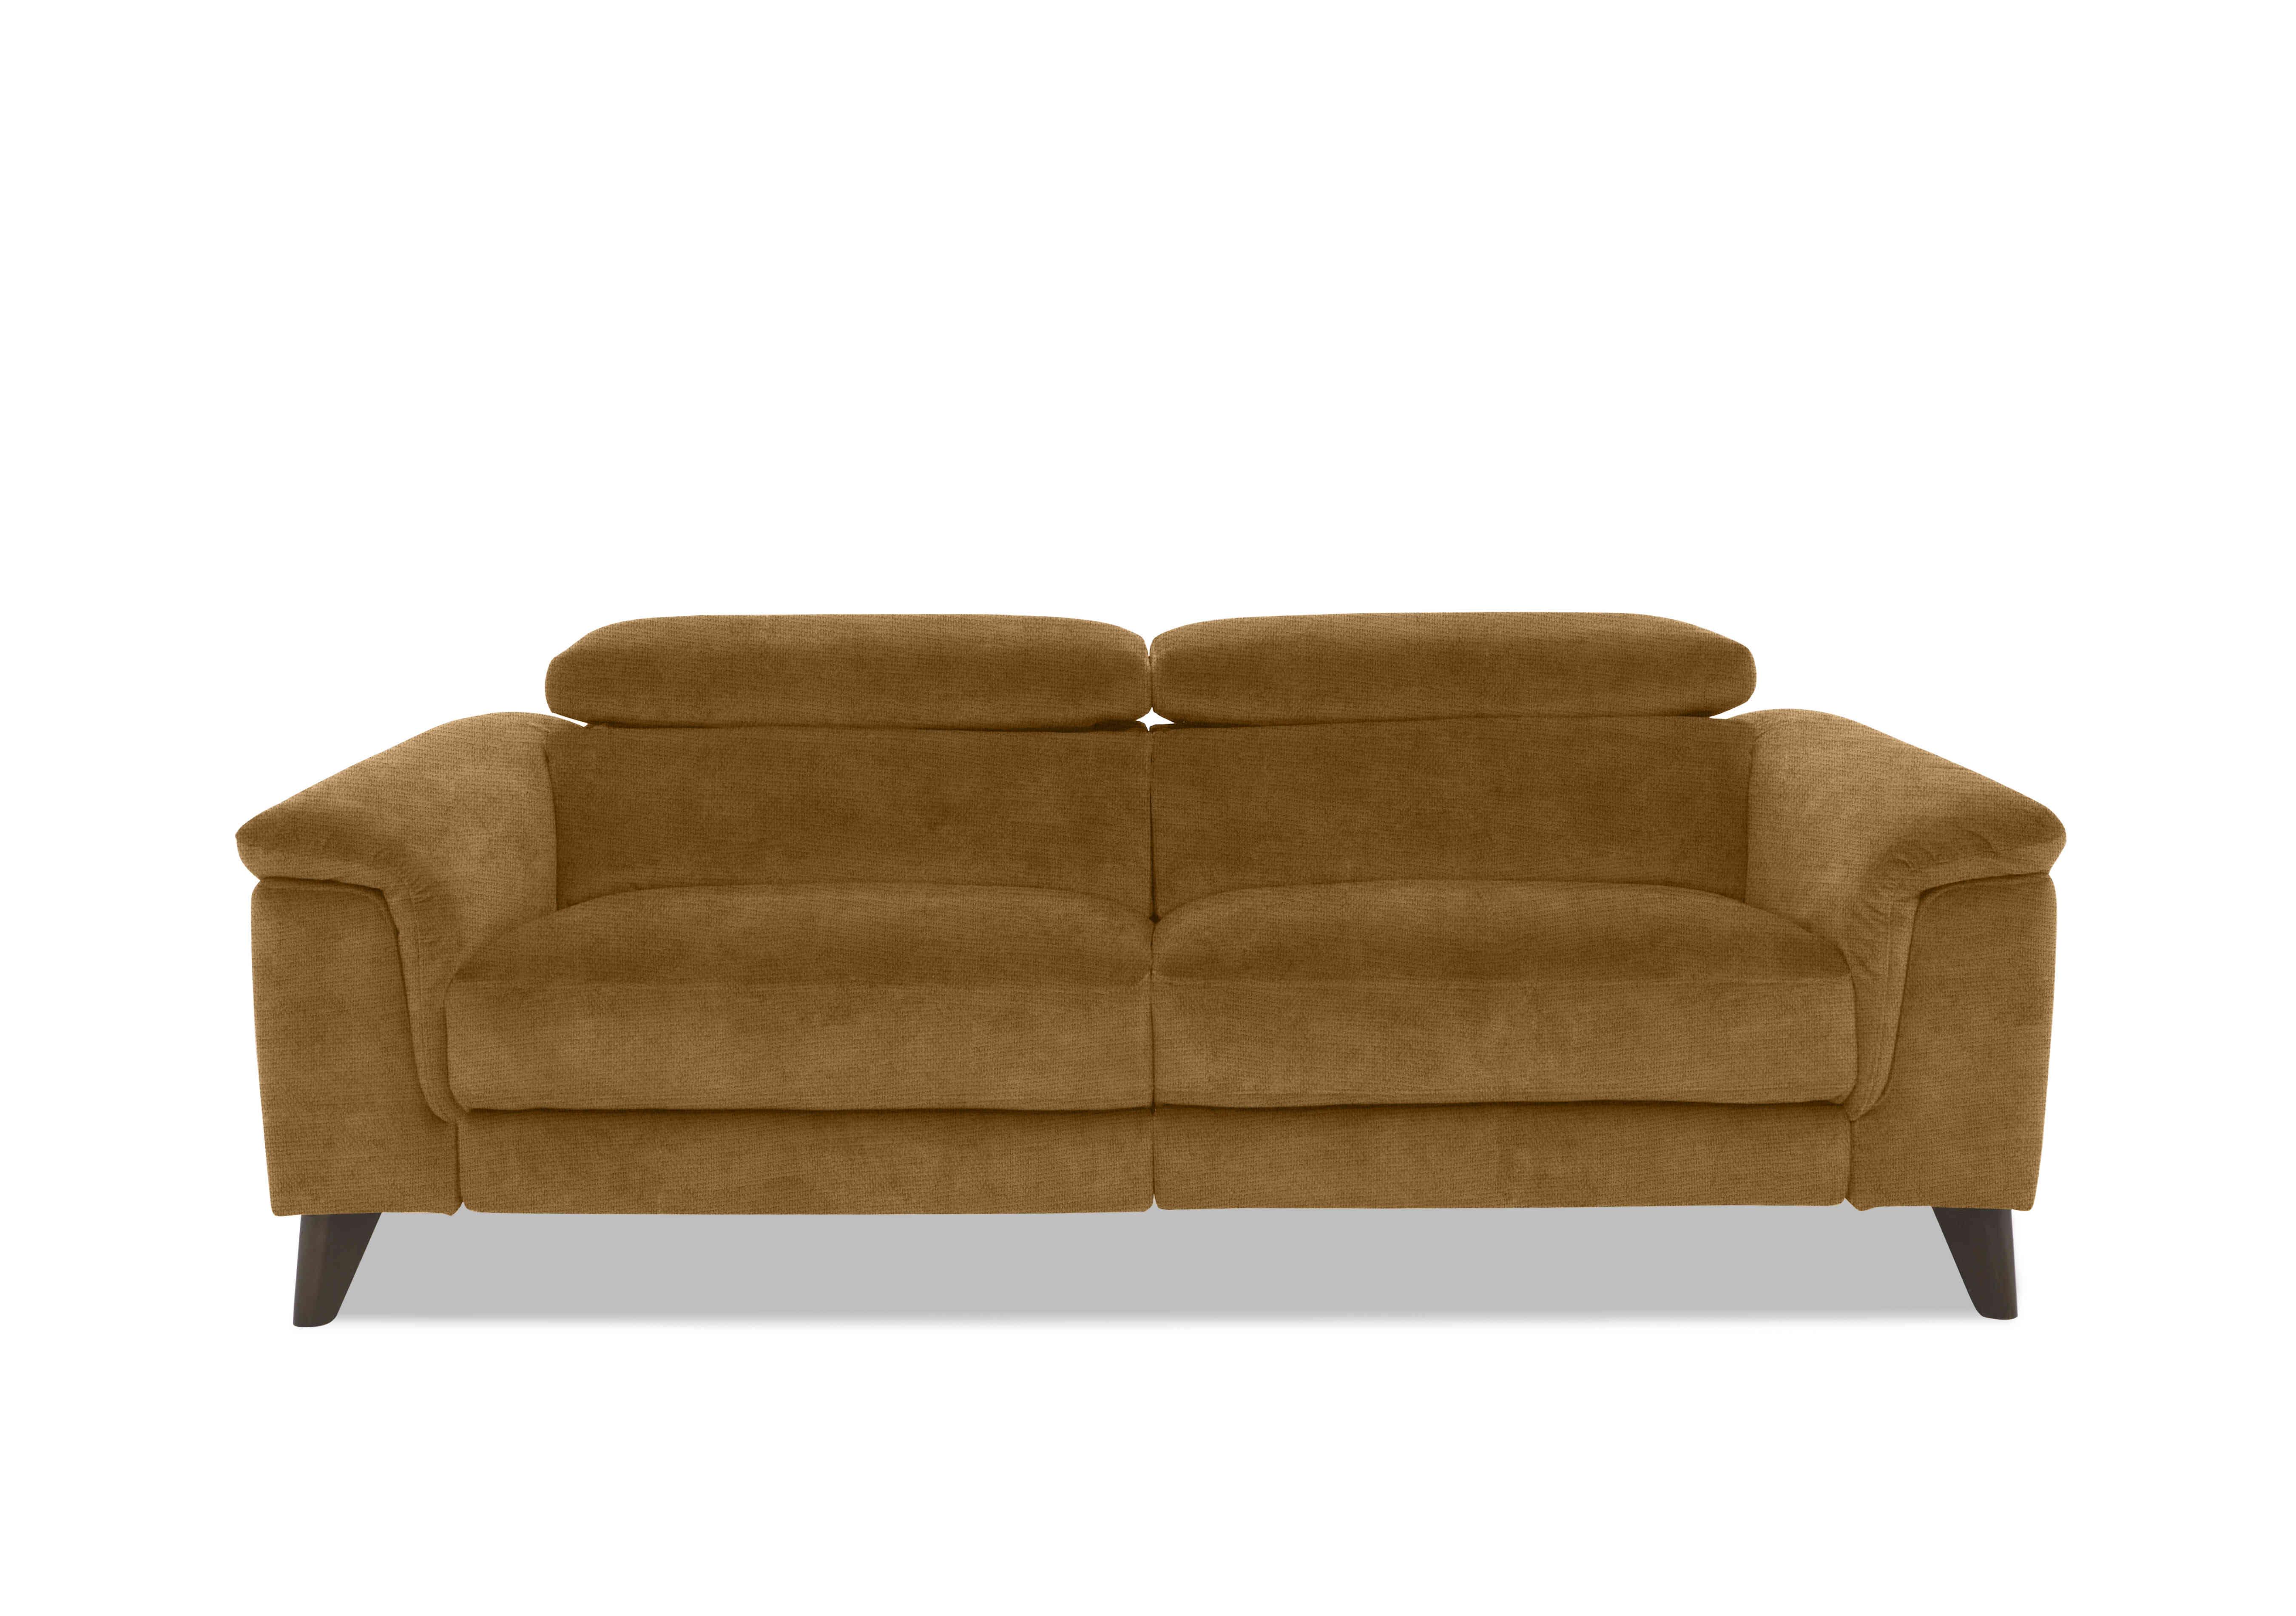 Wade 3 Seater Fabric Sofa in Fab-Coe-R272 Honey Yellow on Furniture Village